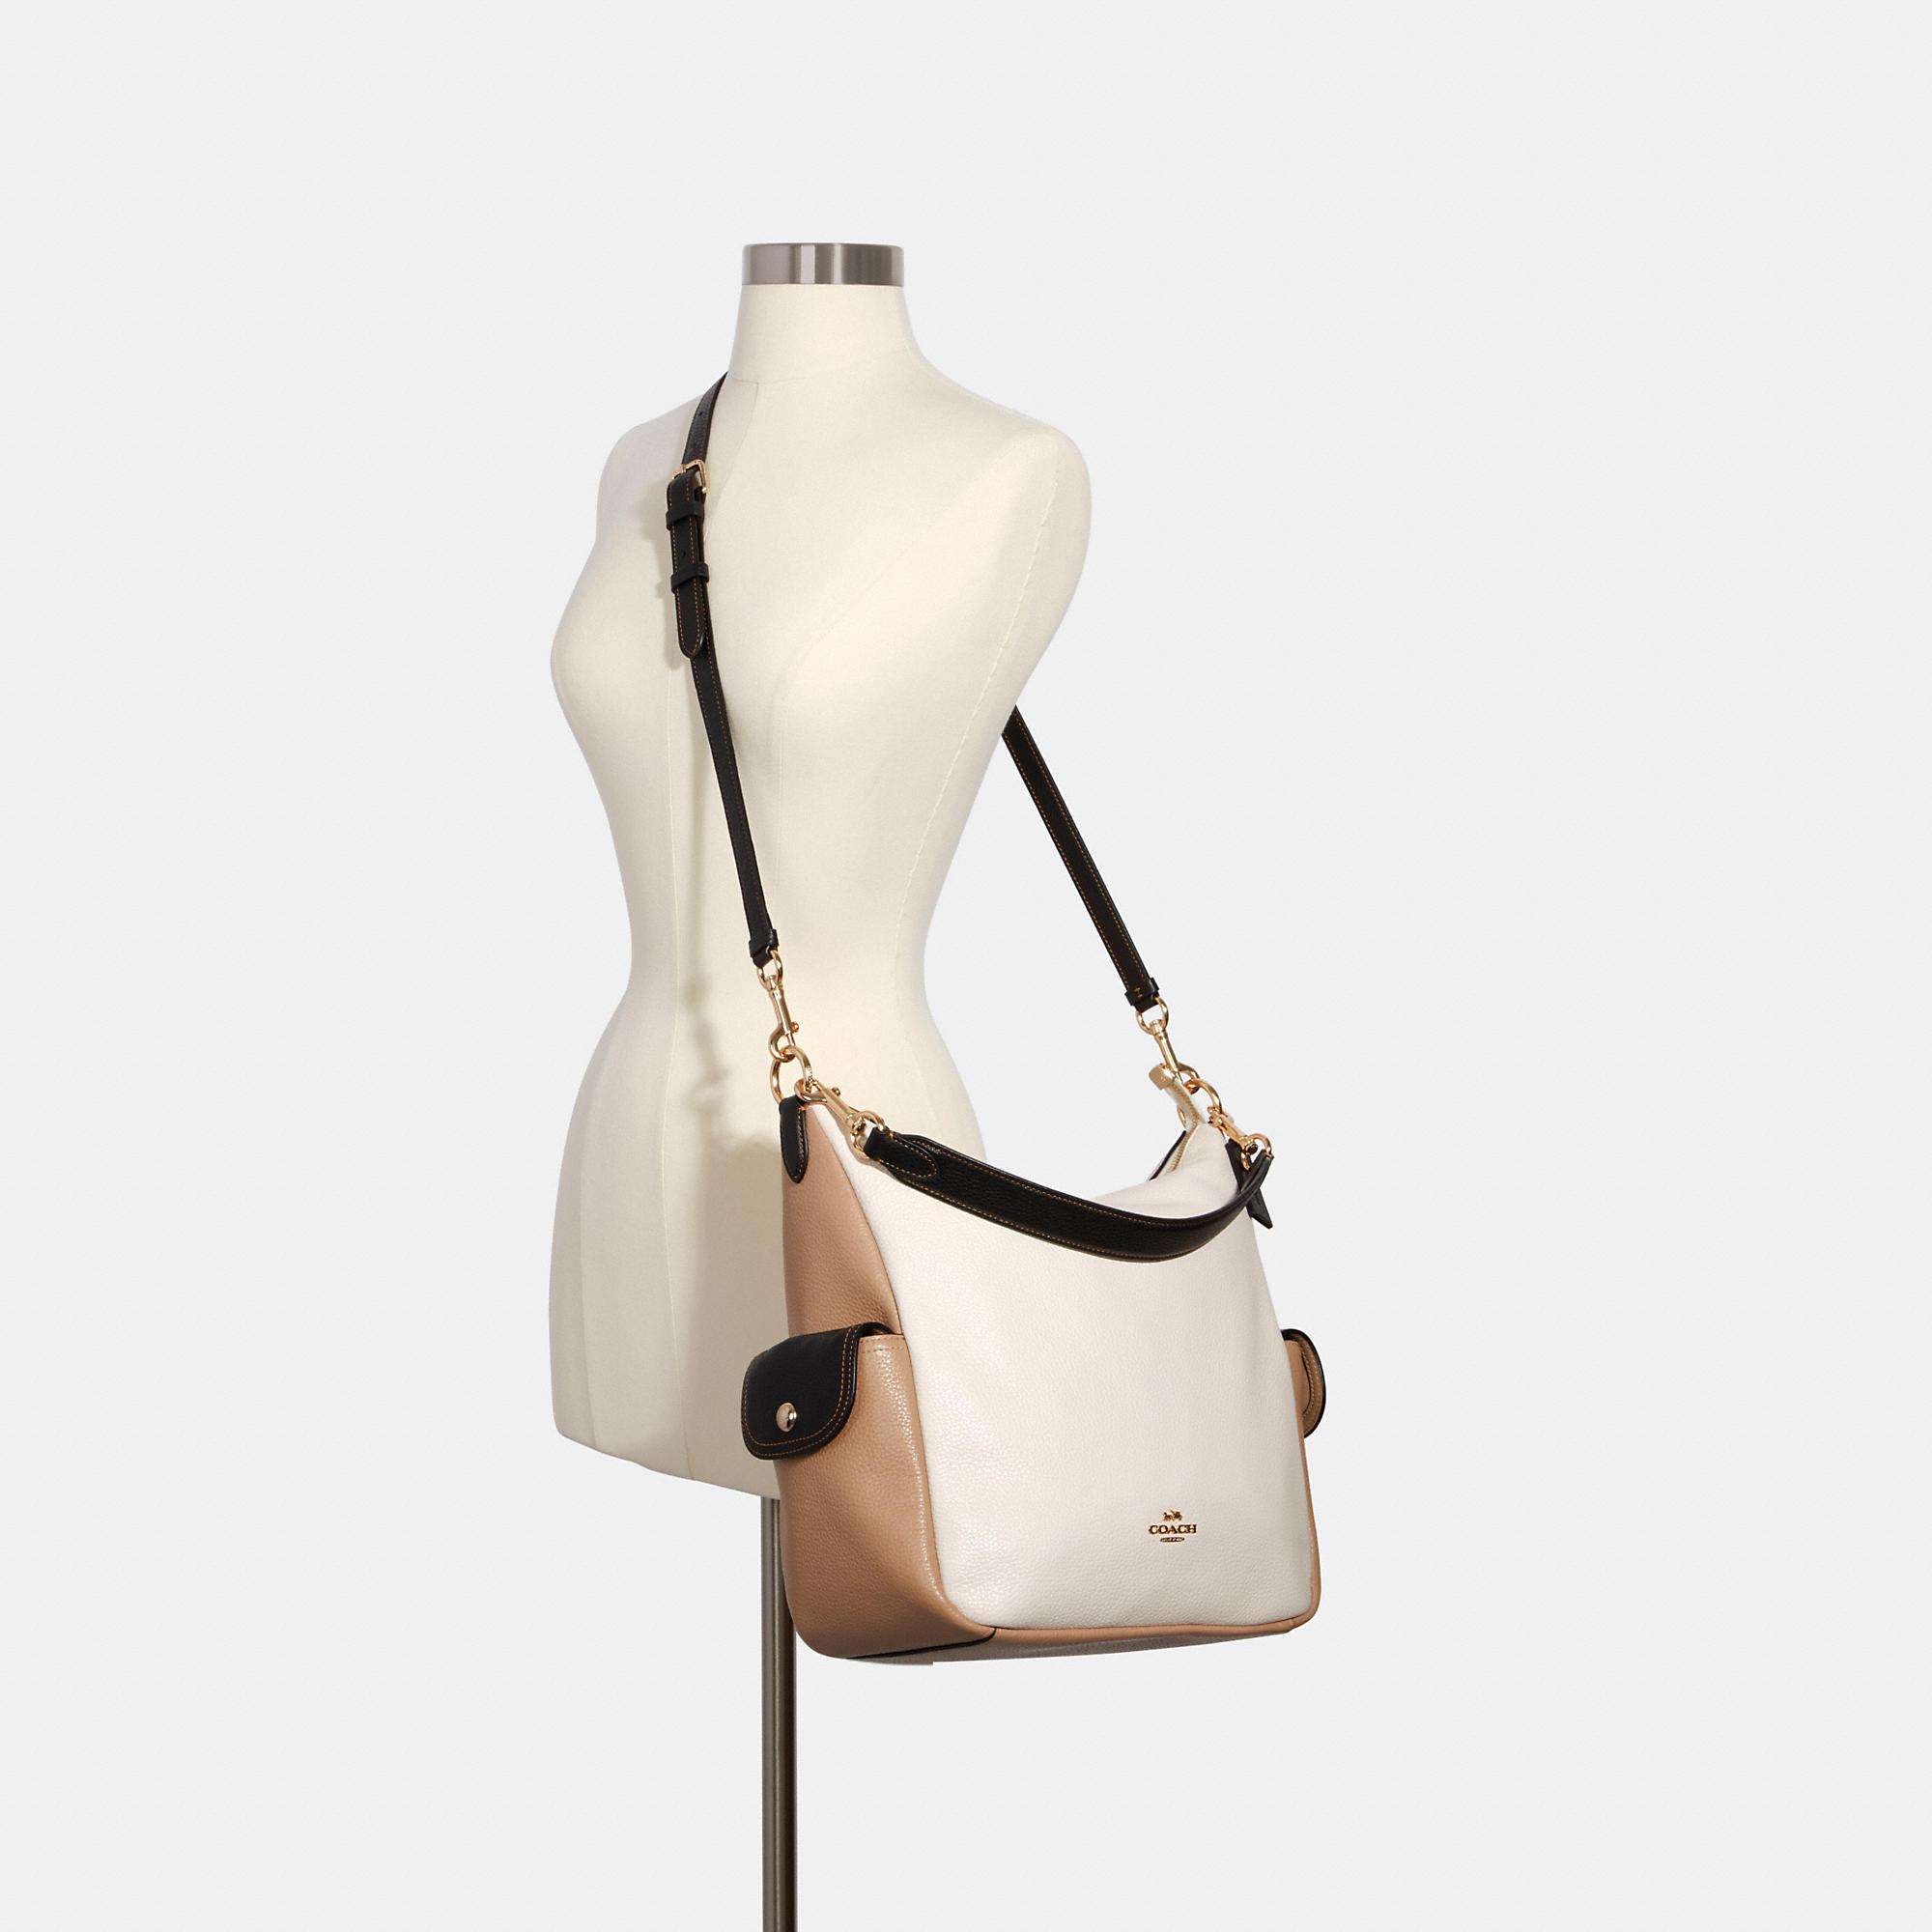 COACH® Outlet  Pennie Shoulder Bag In Colorblock